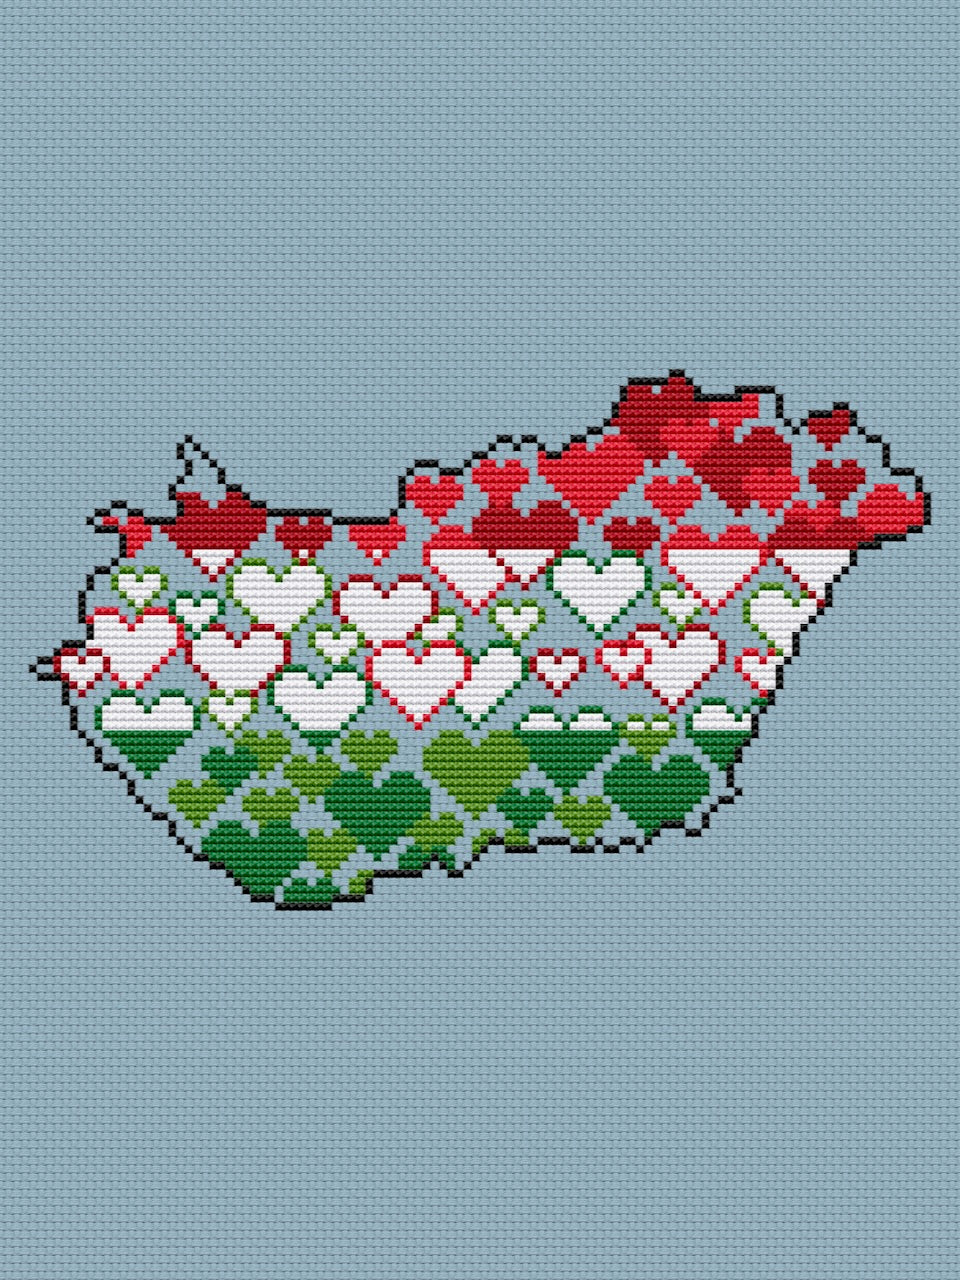 Hungary country pattern